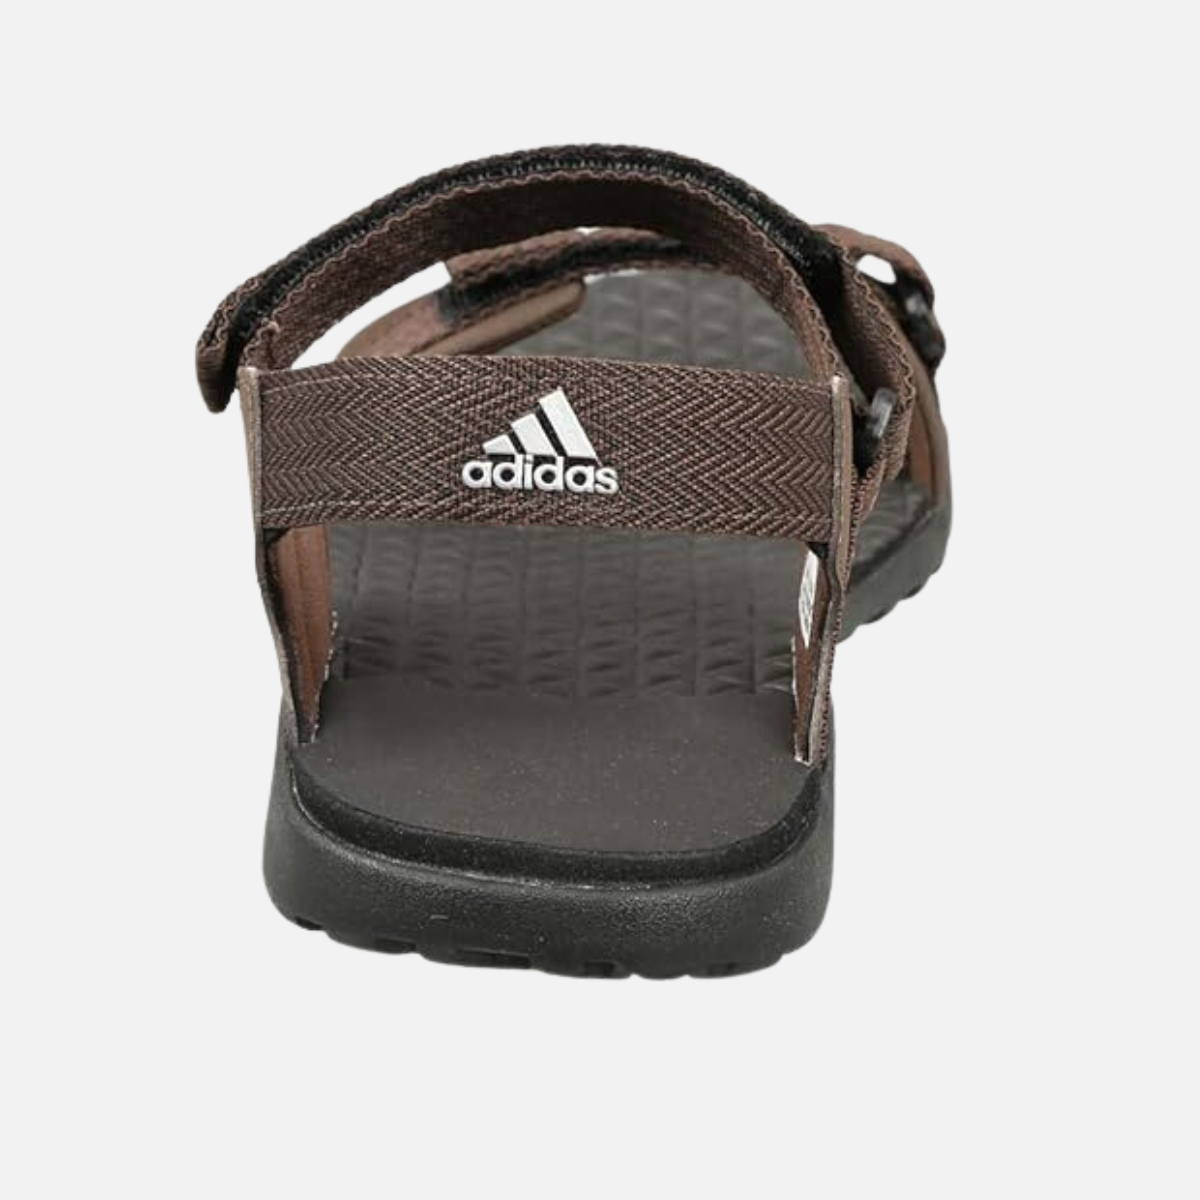 Adidas Elevate Men's Flip-flop -Brown/Silvmt/Cblack